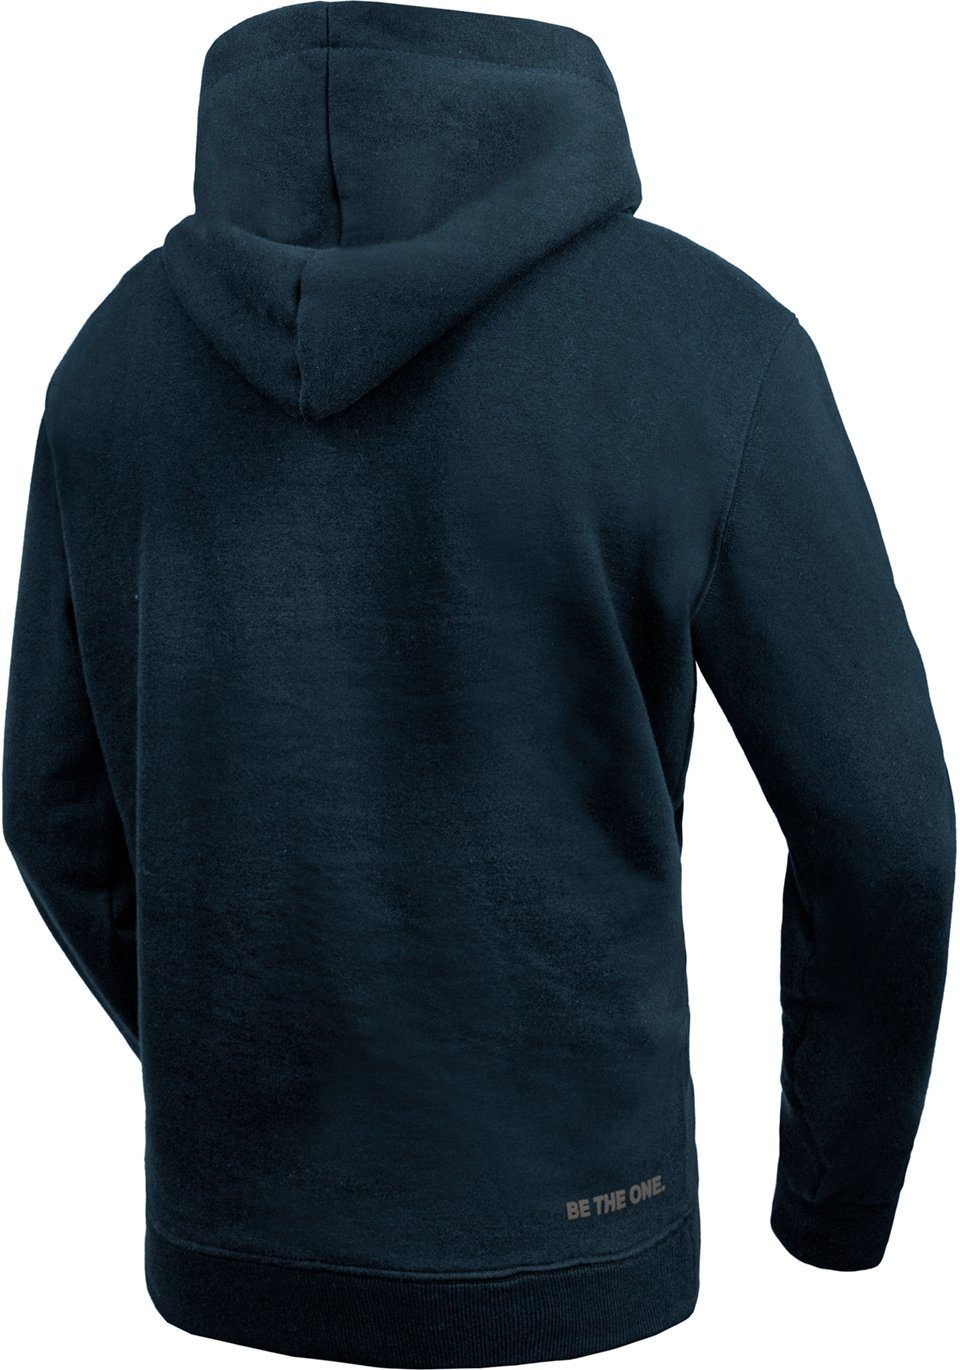 großem Reusch Hoodie Markenprint Kapuzensweatshirt mit